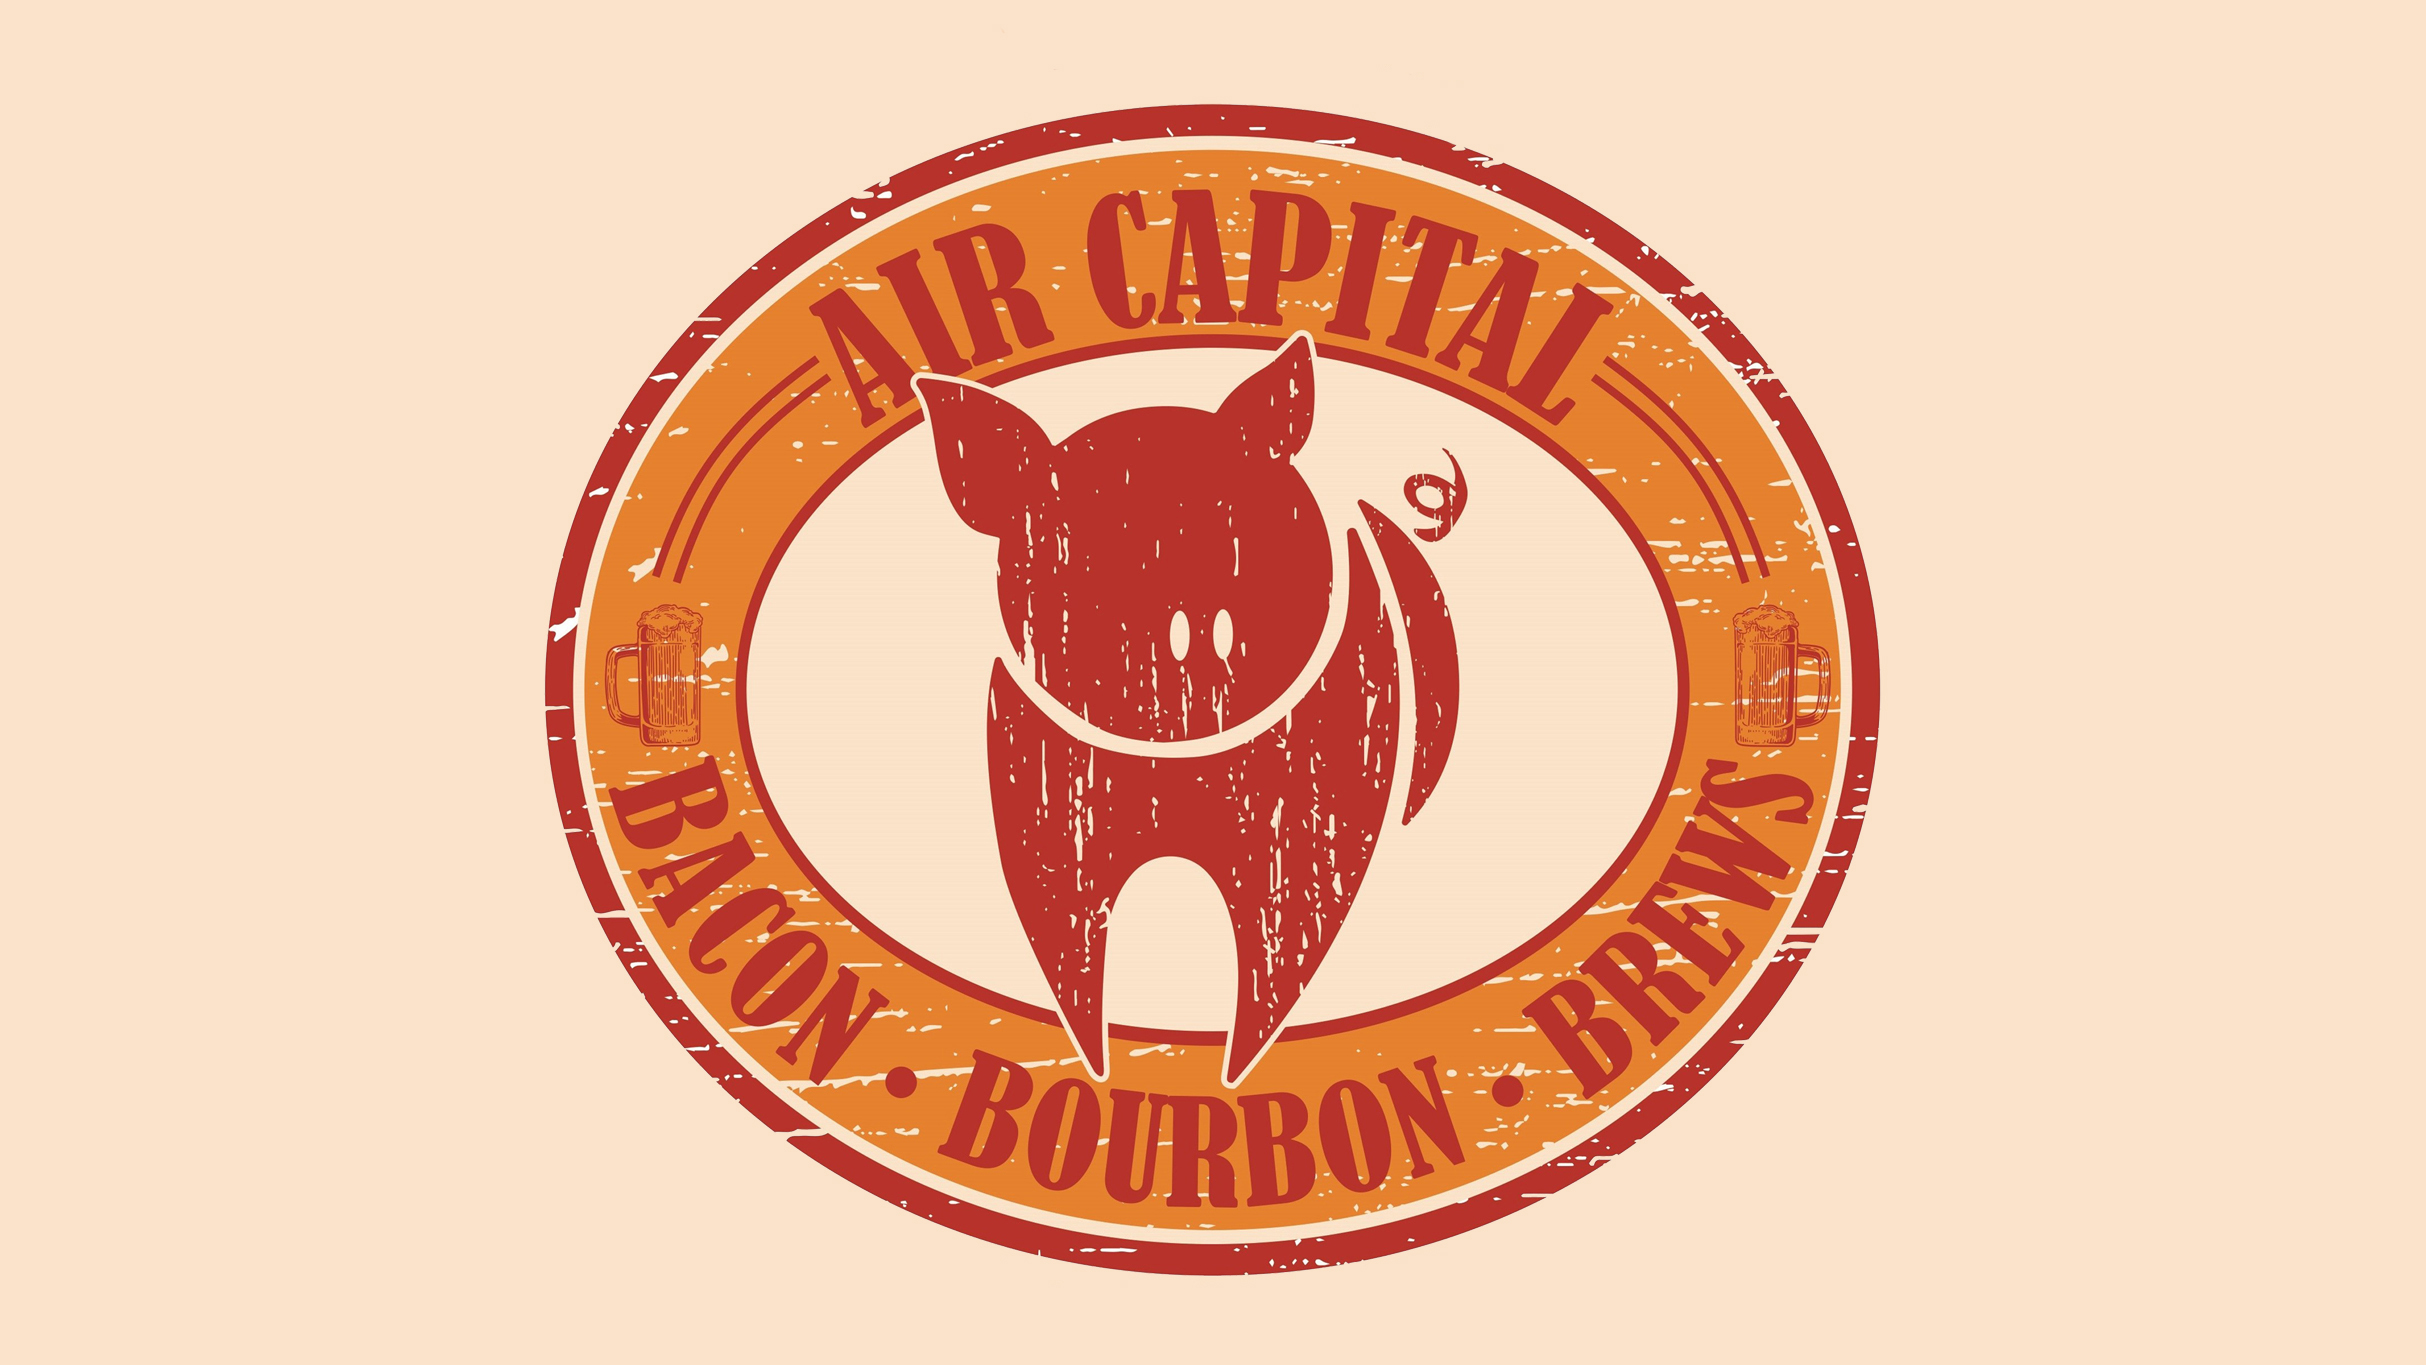 Air Capital Bacon Bourbon and Brews - VIP